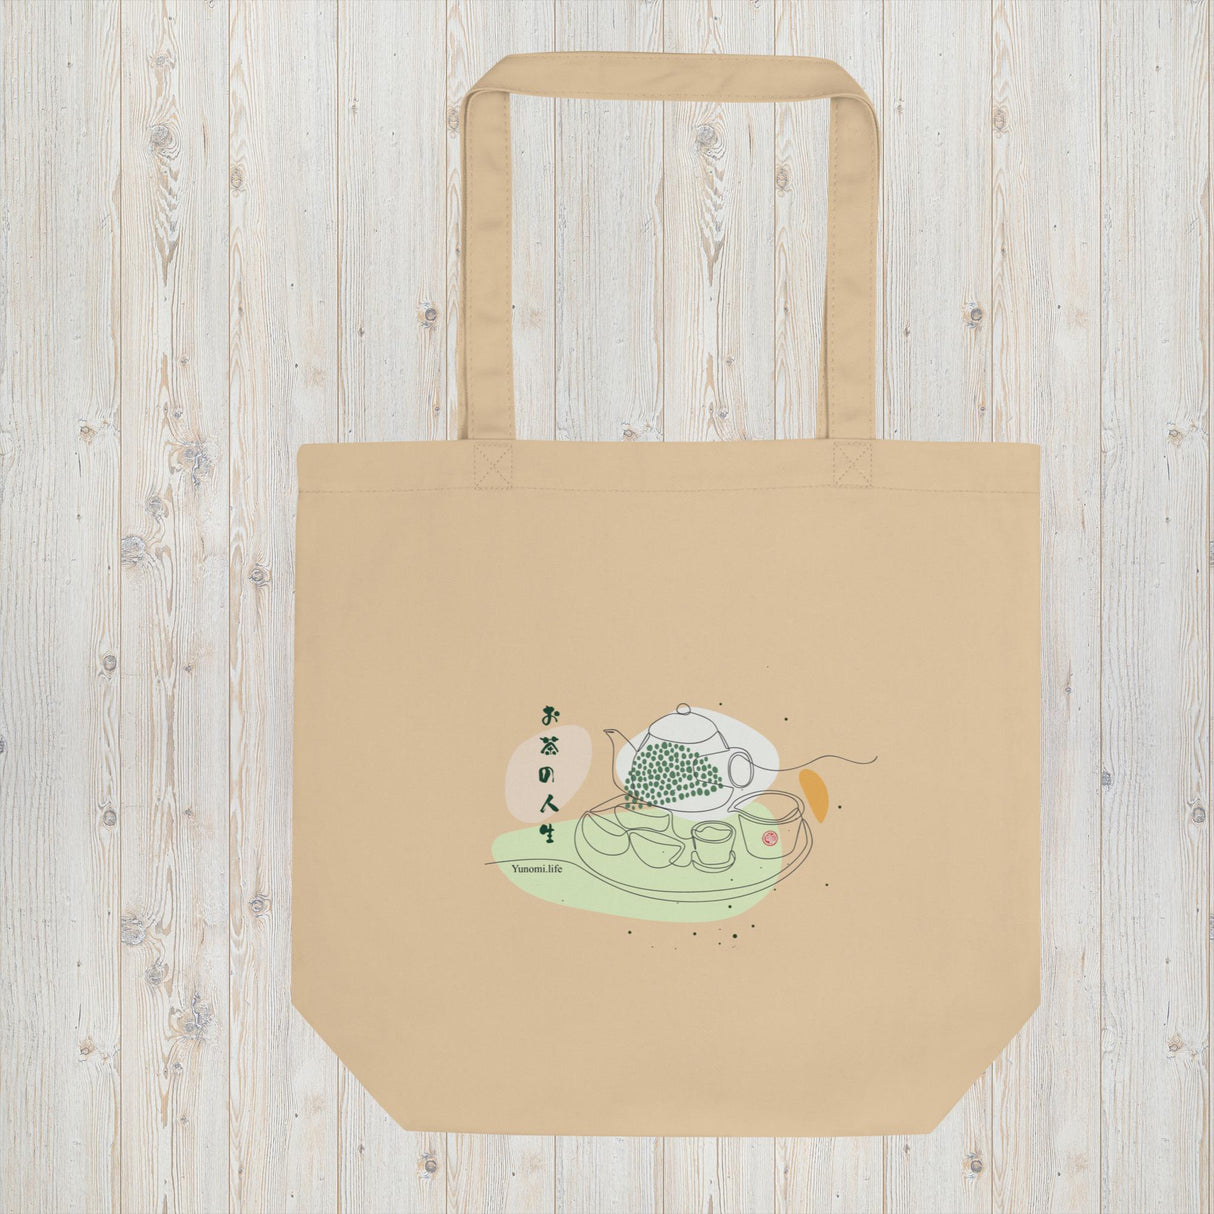 Yunomi Eco Tote Bag